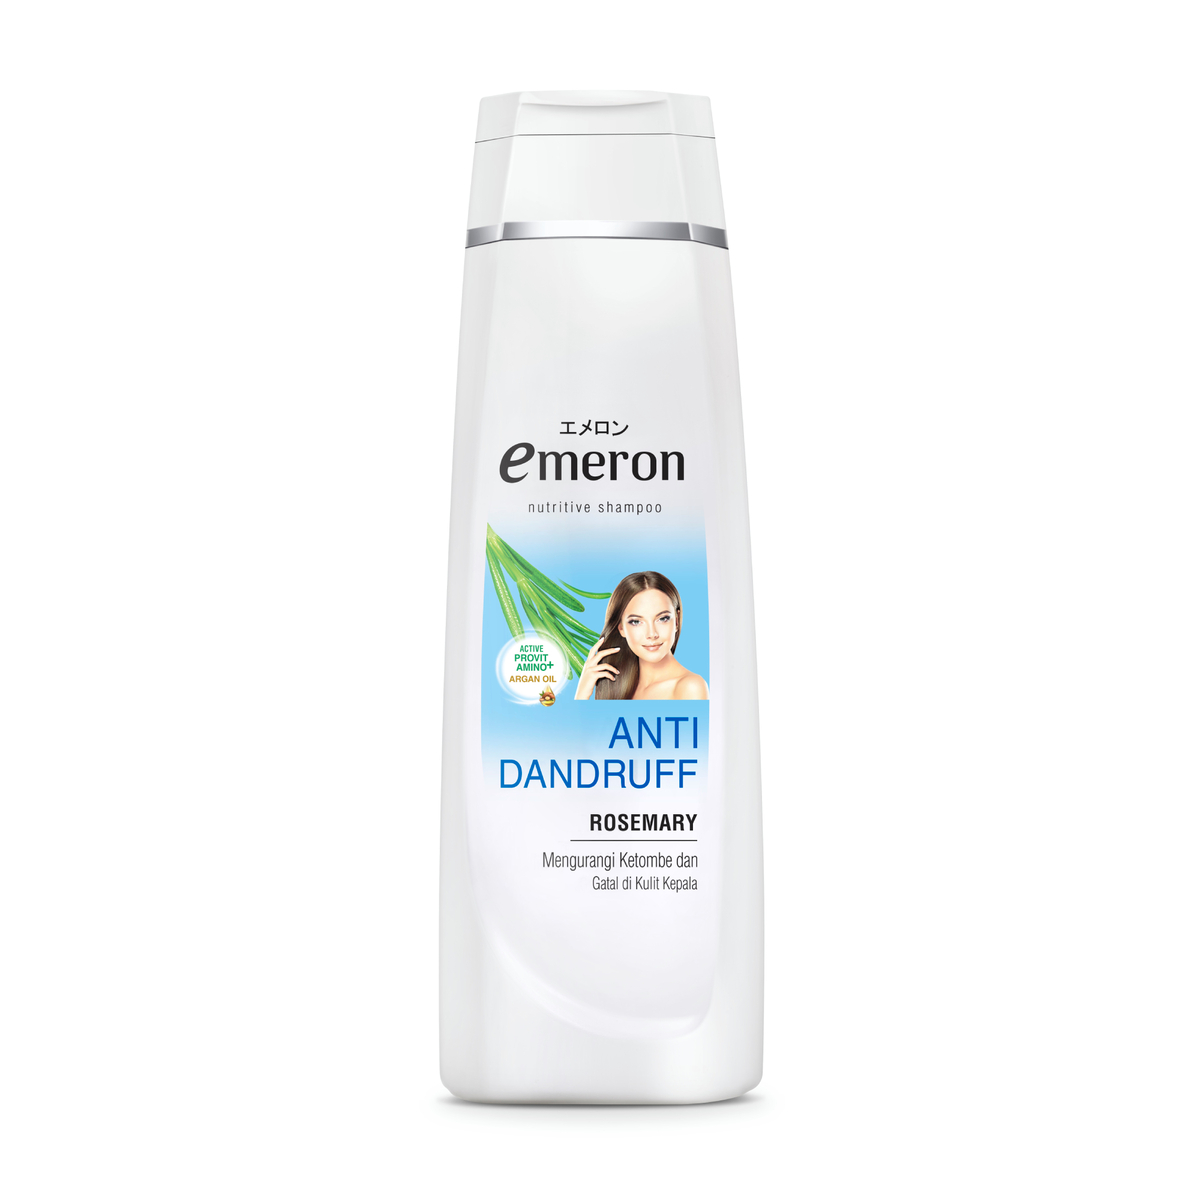 Emeron Shampoo Anti Dandruff Botol 170ml